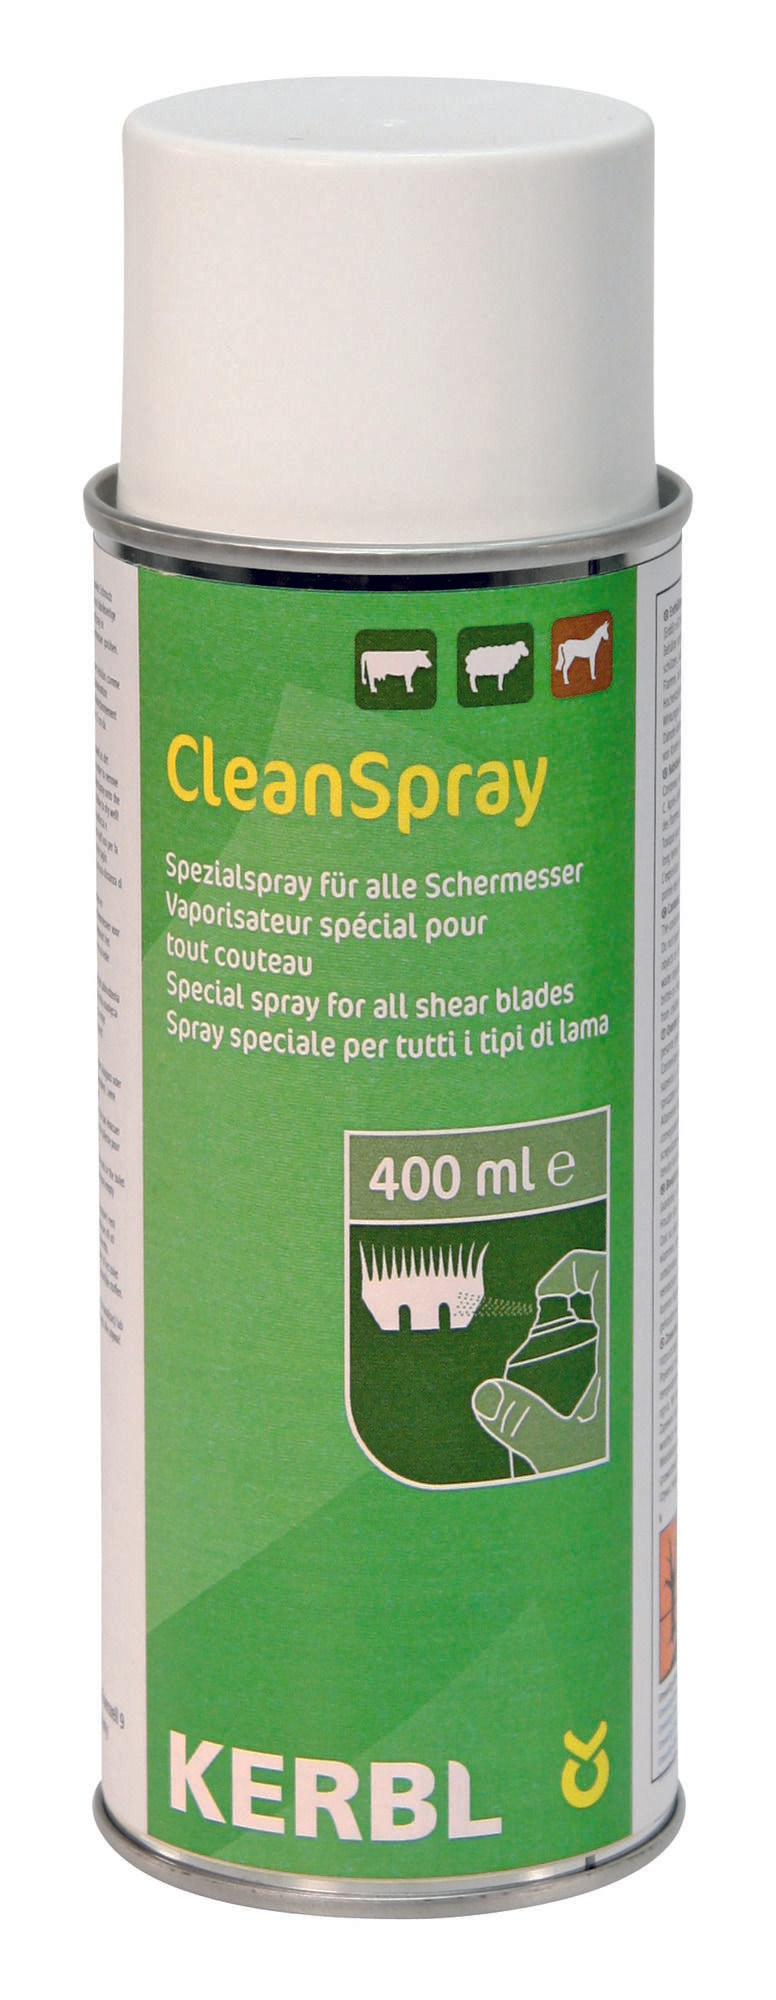 Clean spray